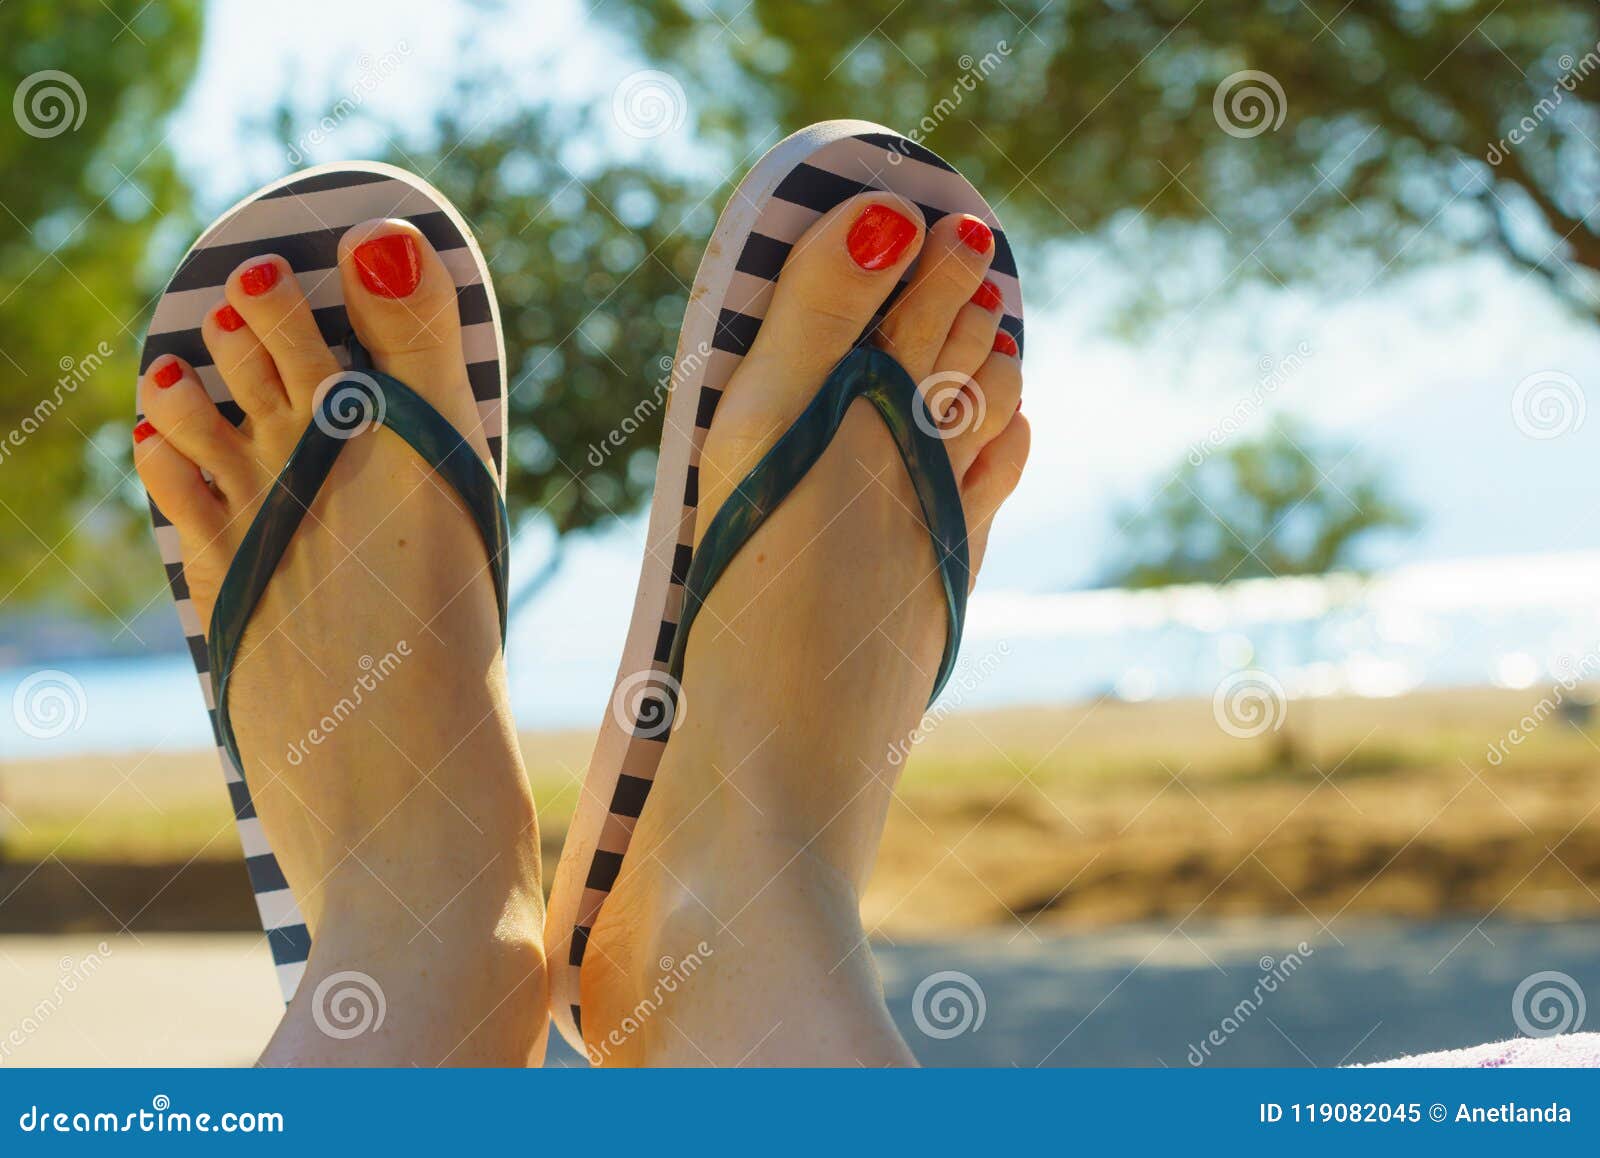 Female Feet Wearing Flip Flops Having Red Nails Stock Image - Image of ...